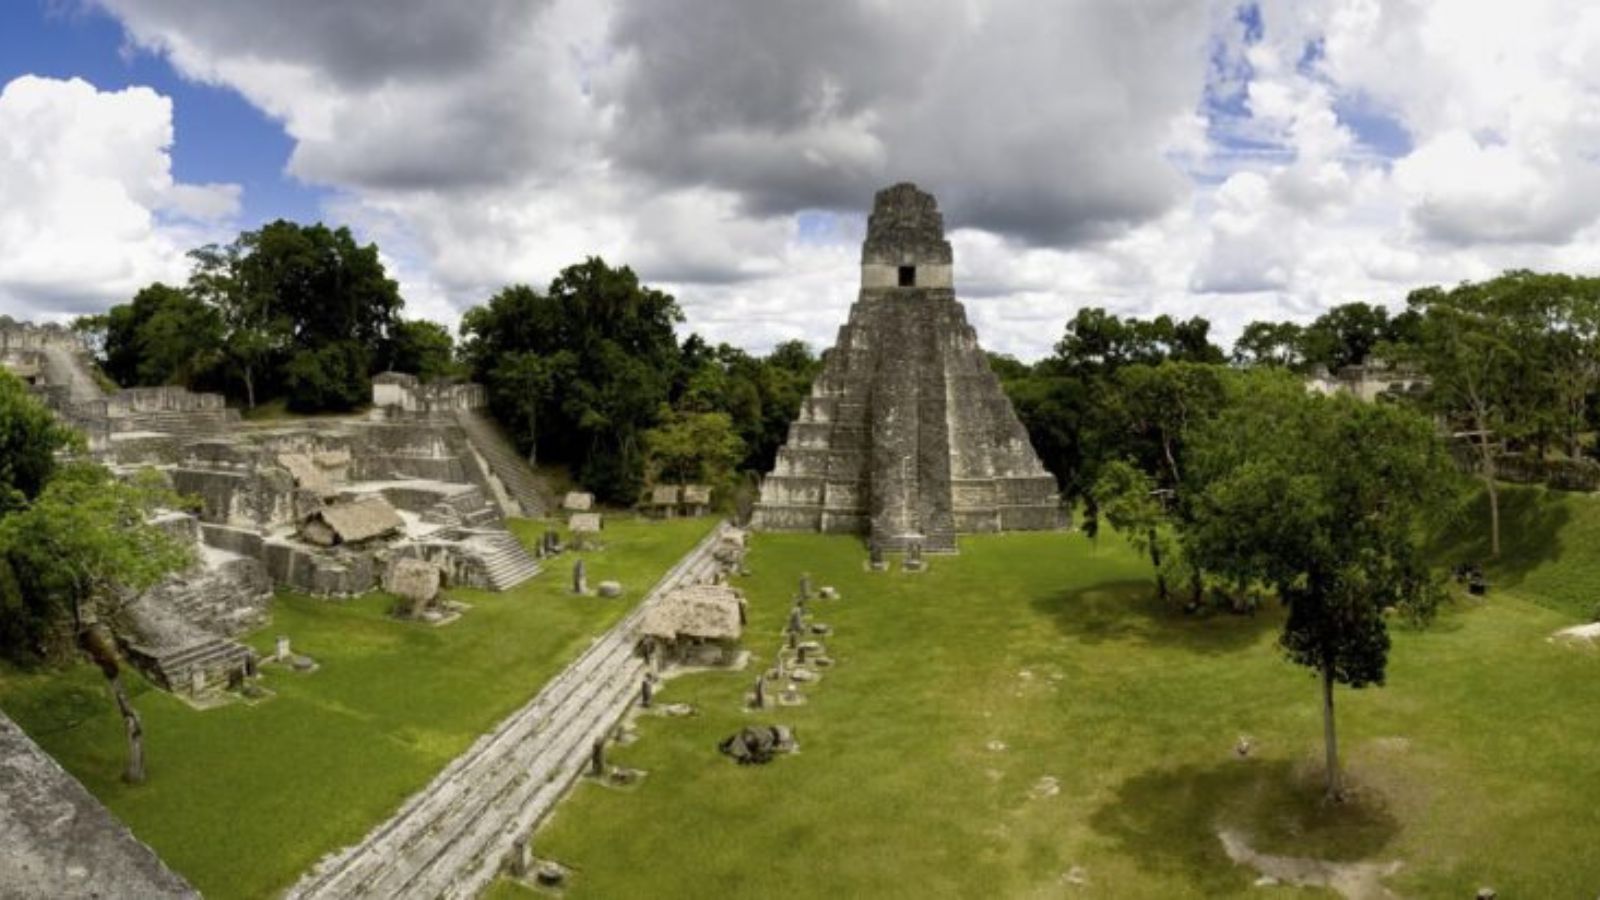 My trip to Guatemala to see the Mayan pyramids